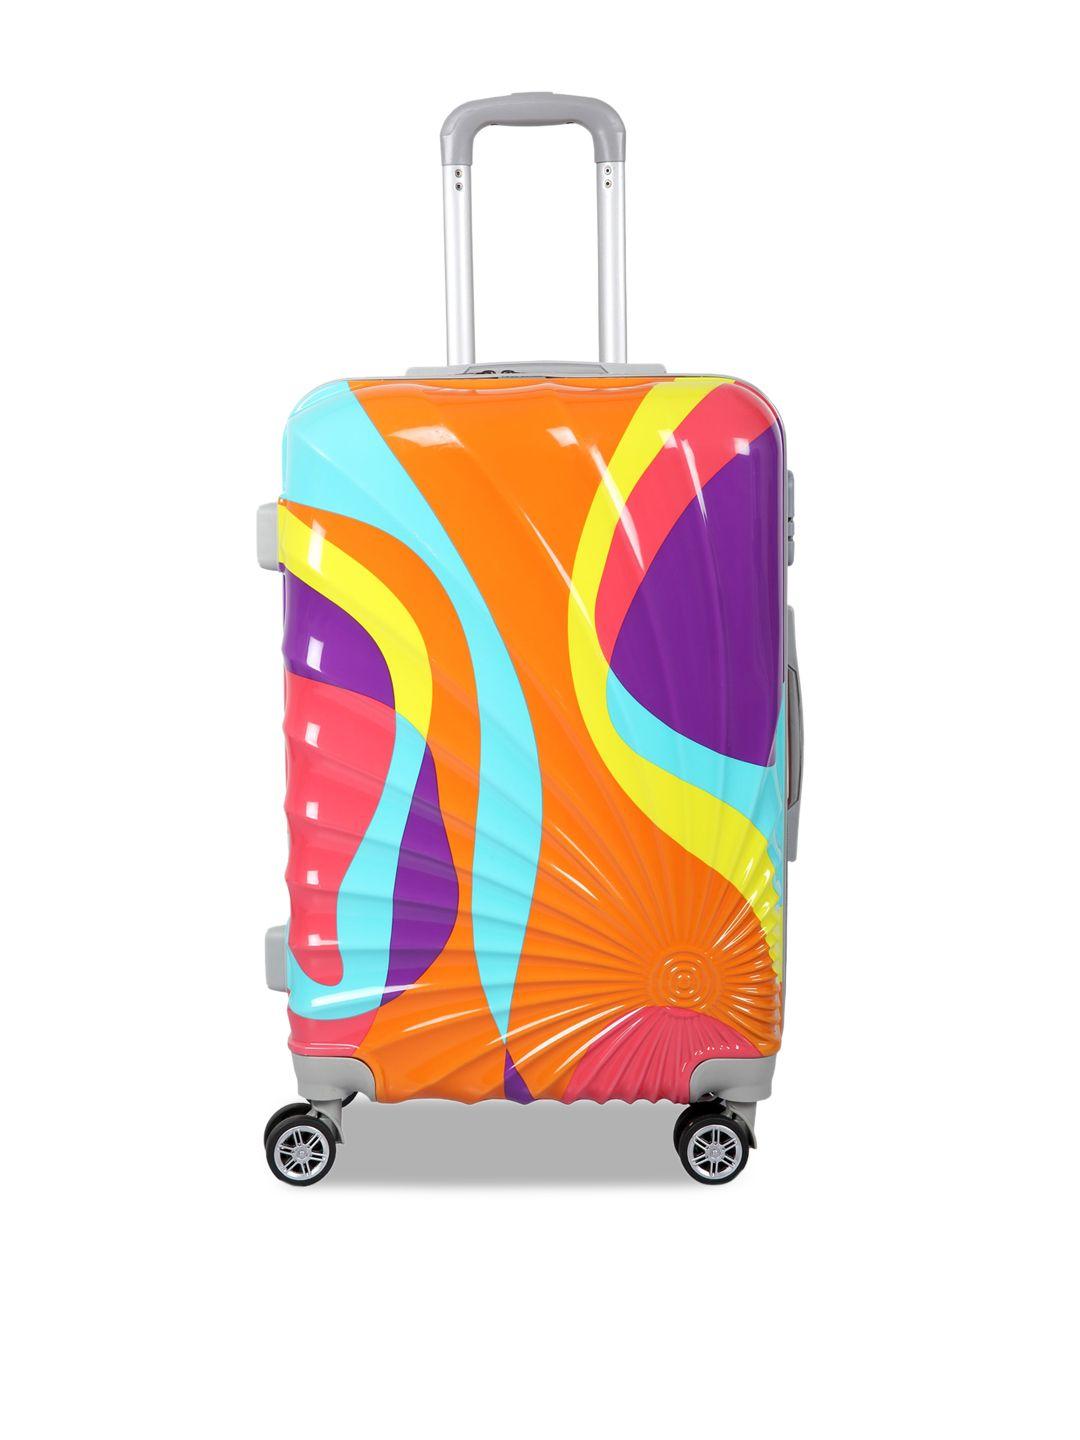 Polo Class Multi Colourblocked Hard-Sided Cabin Trolley Suitcase